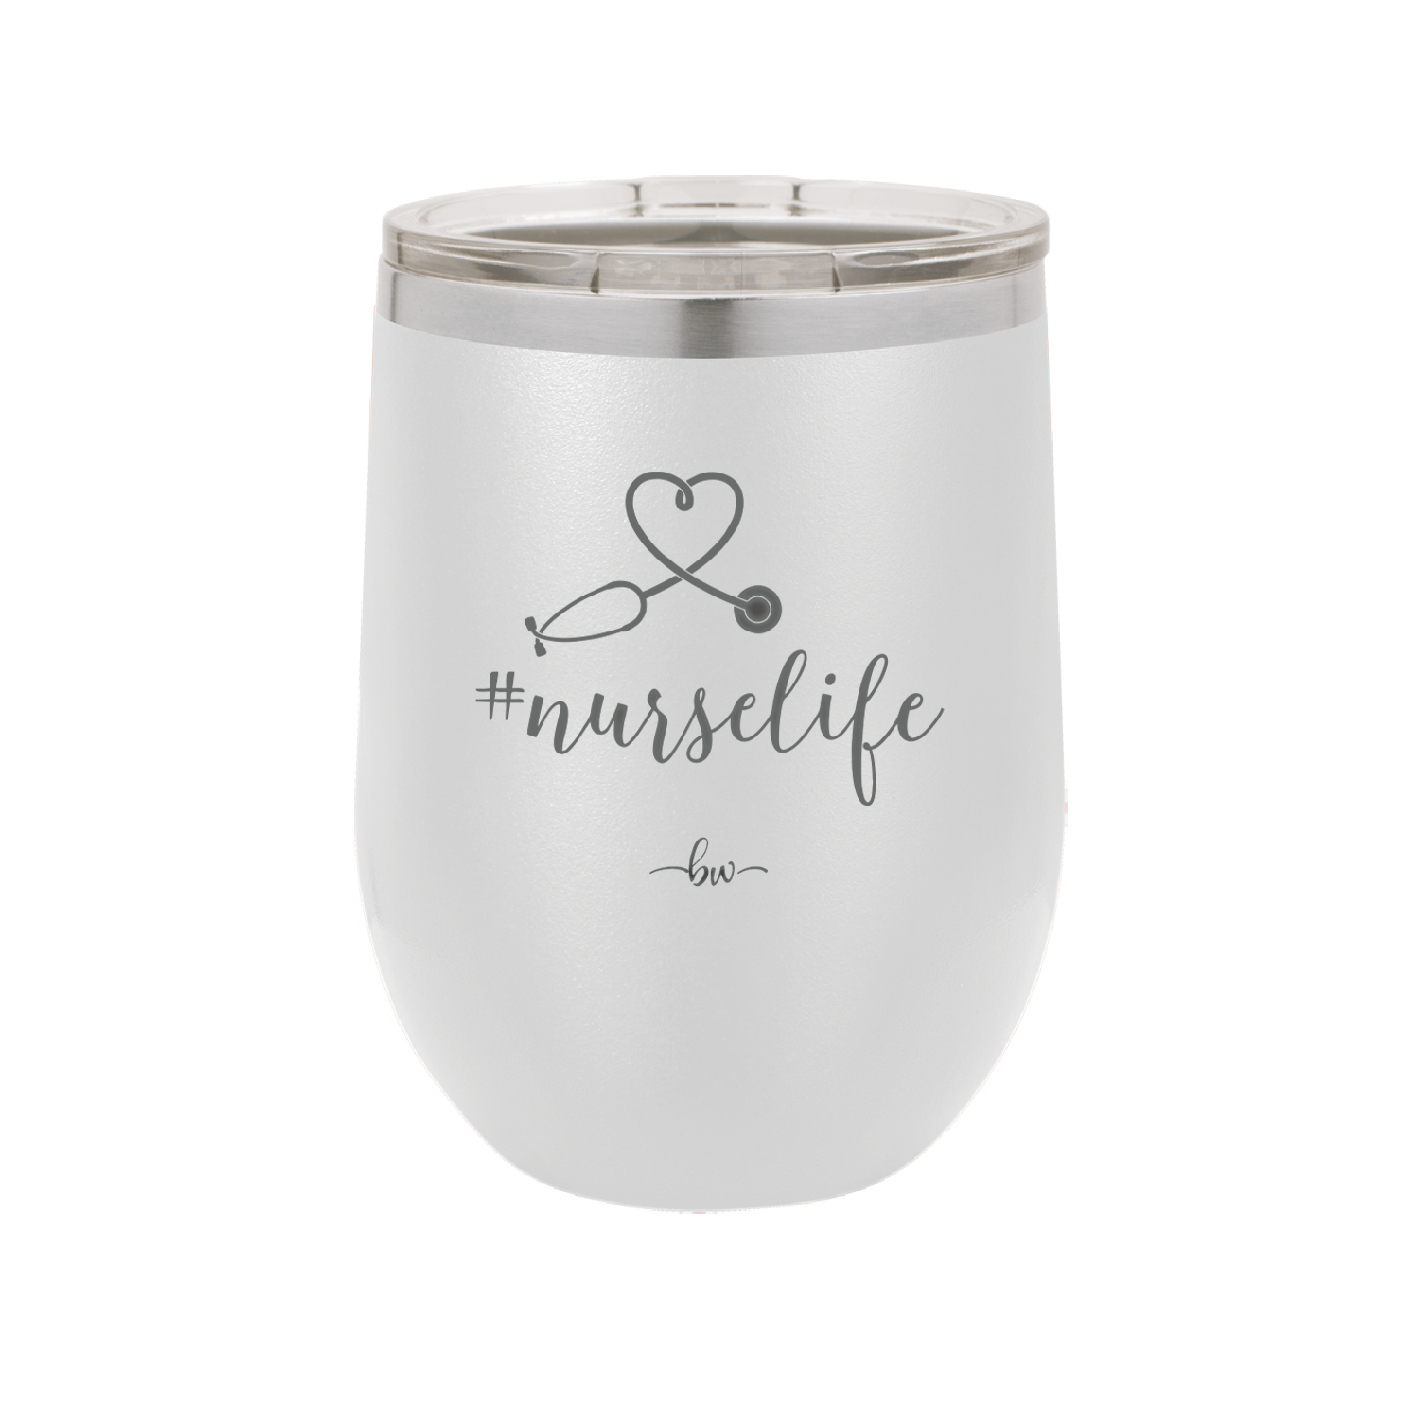 12 oz #nurselife wine cup - white